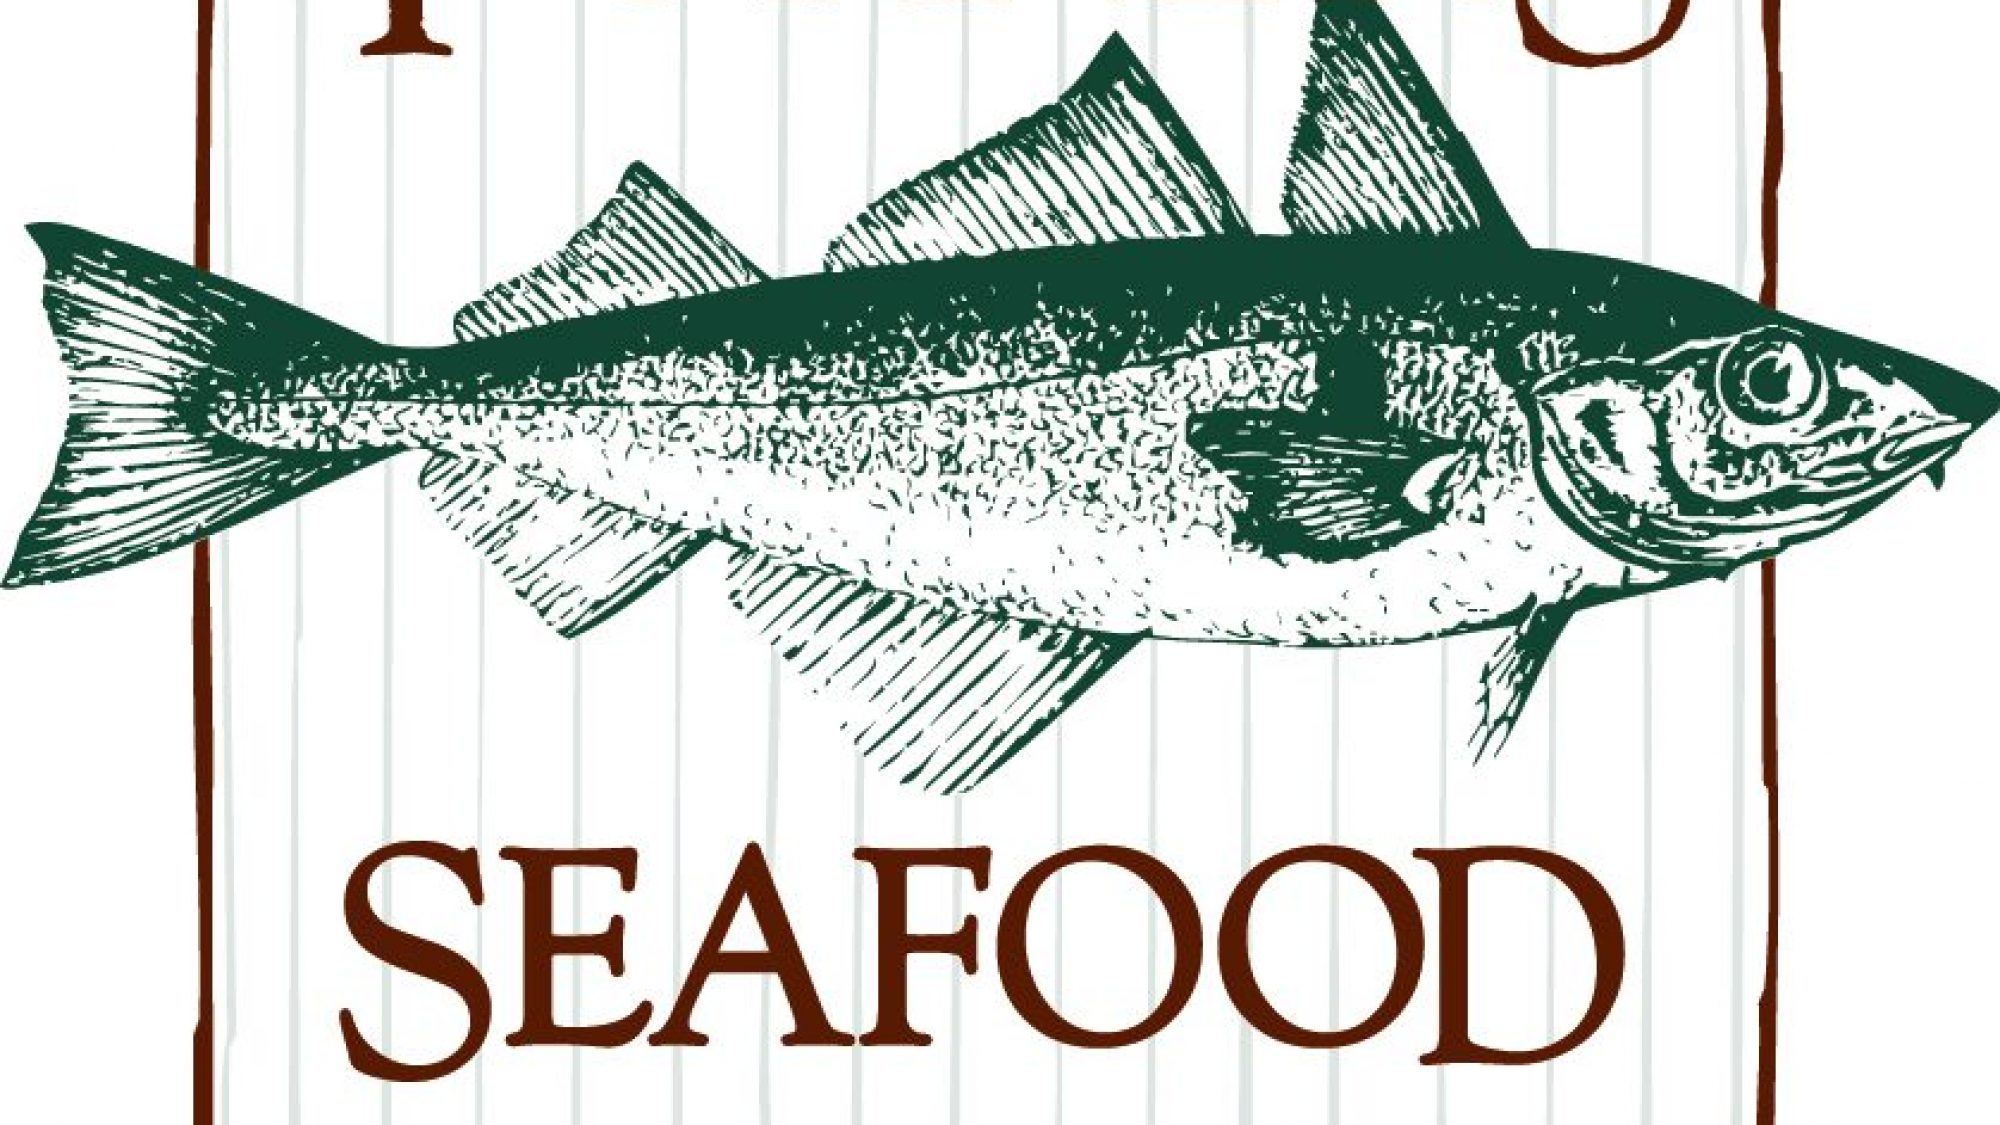 Turner's Seafood logo